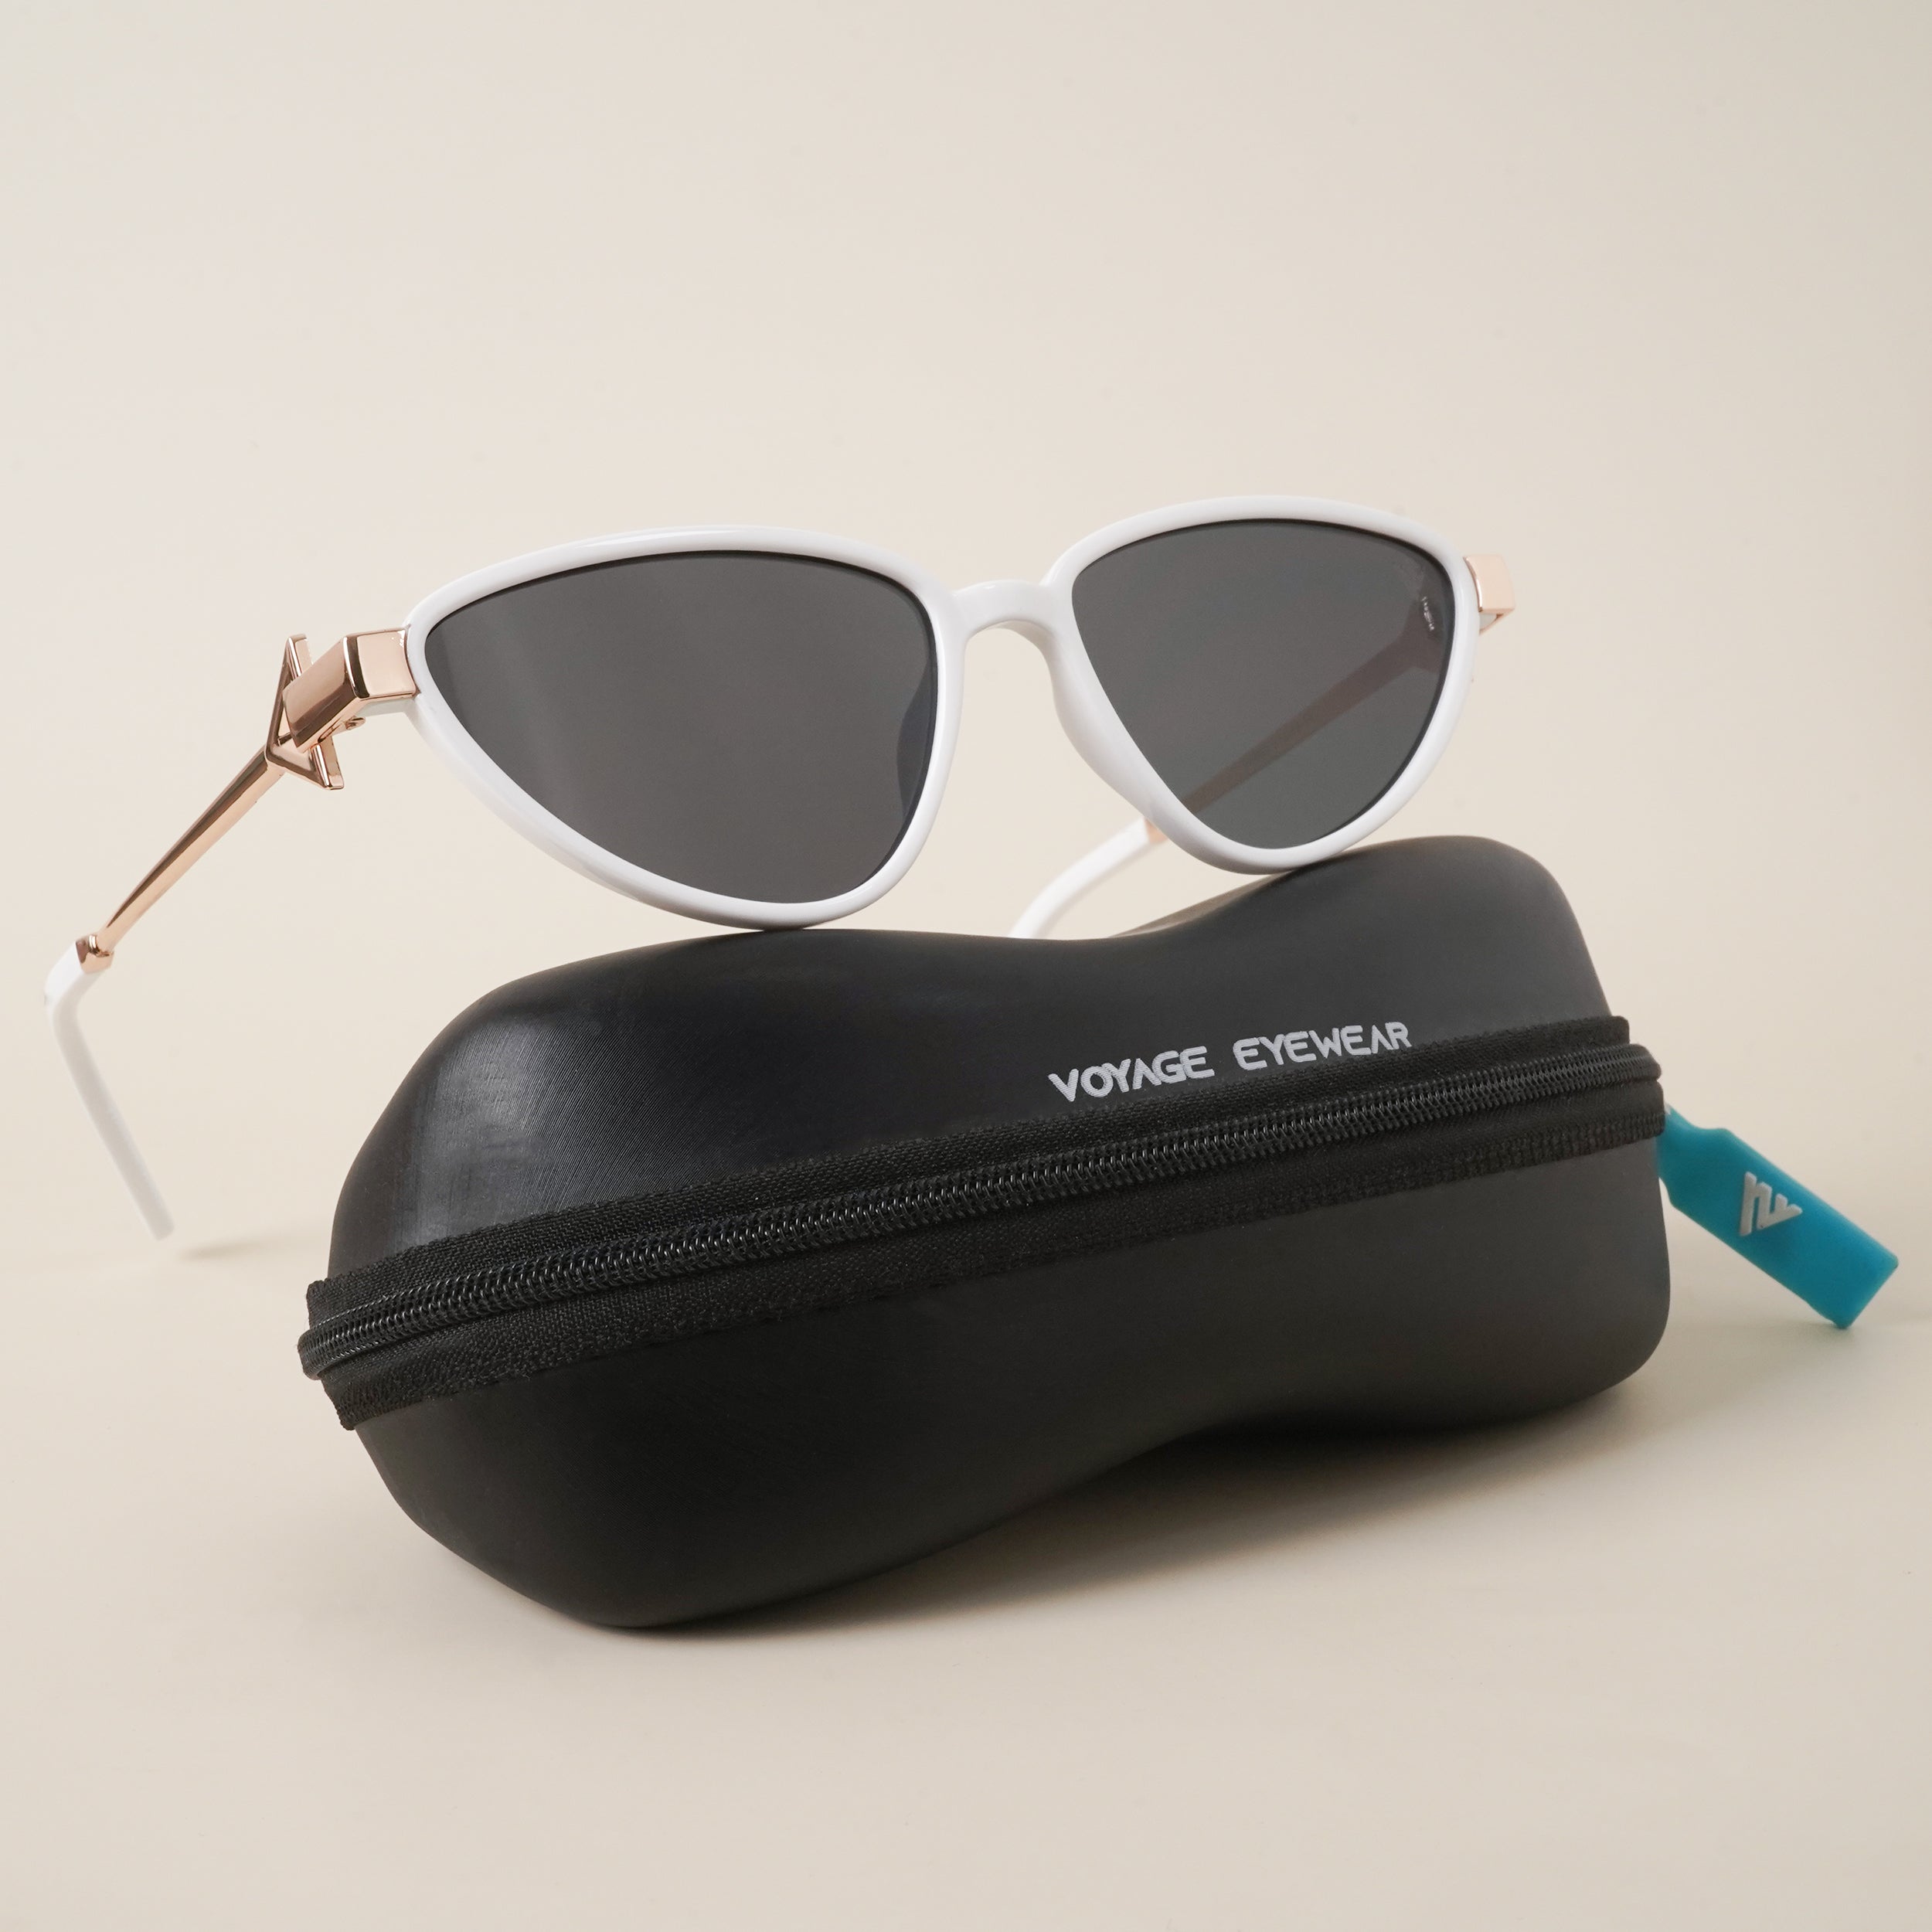 Voyage Black Cateye Sunglasses for Women (LH066MG3984)